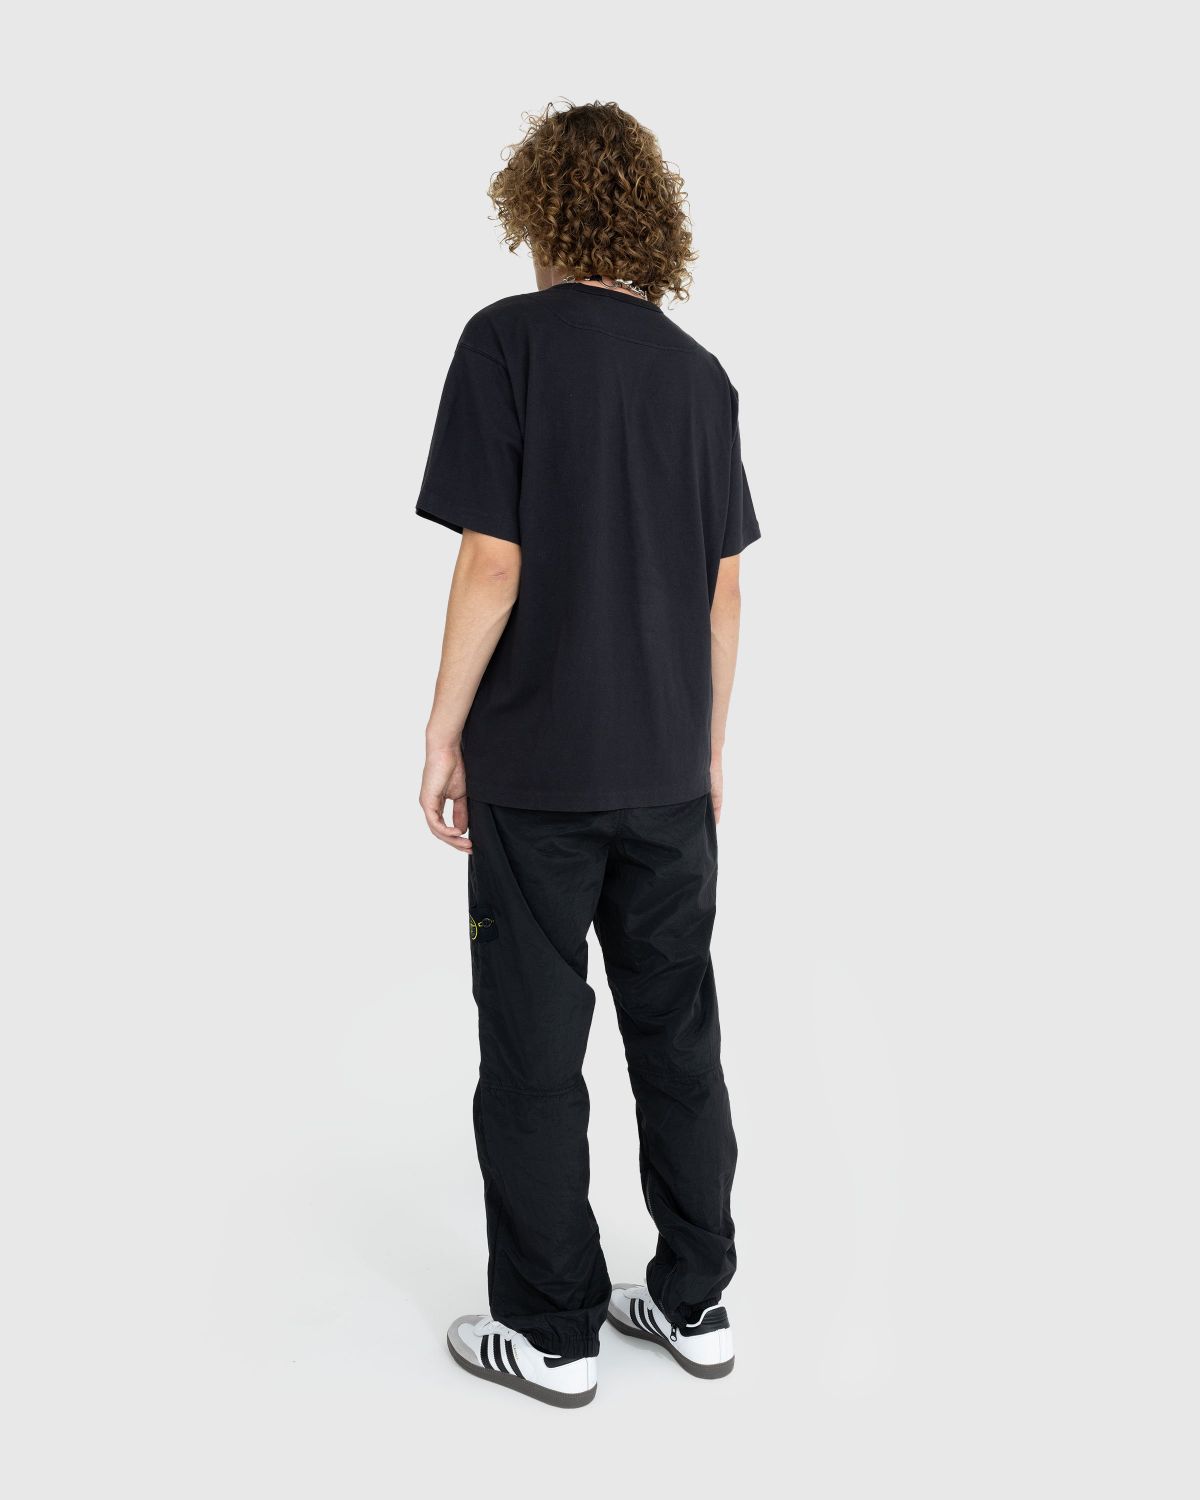 Stone Island – Garment-Dyed Logo T-Shirt Black - T-shirts - Black - Image 4